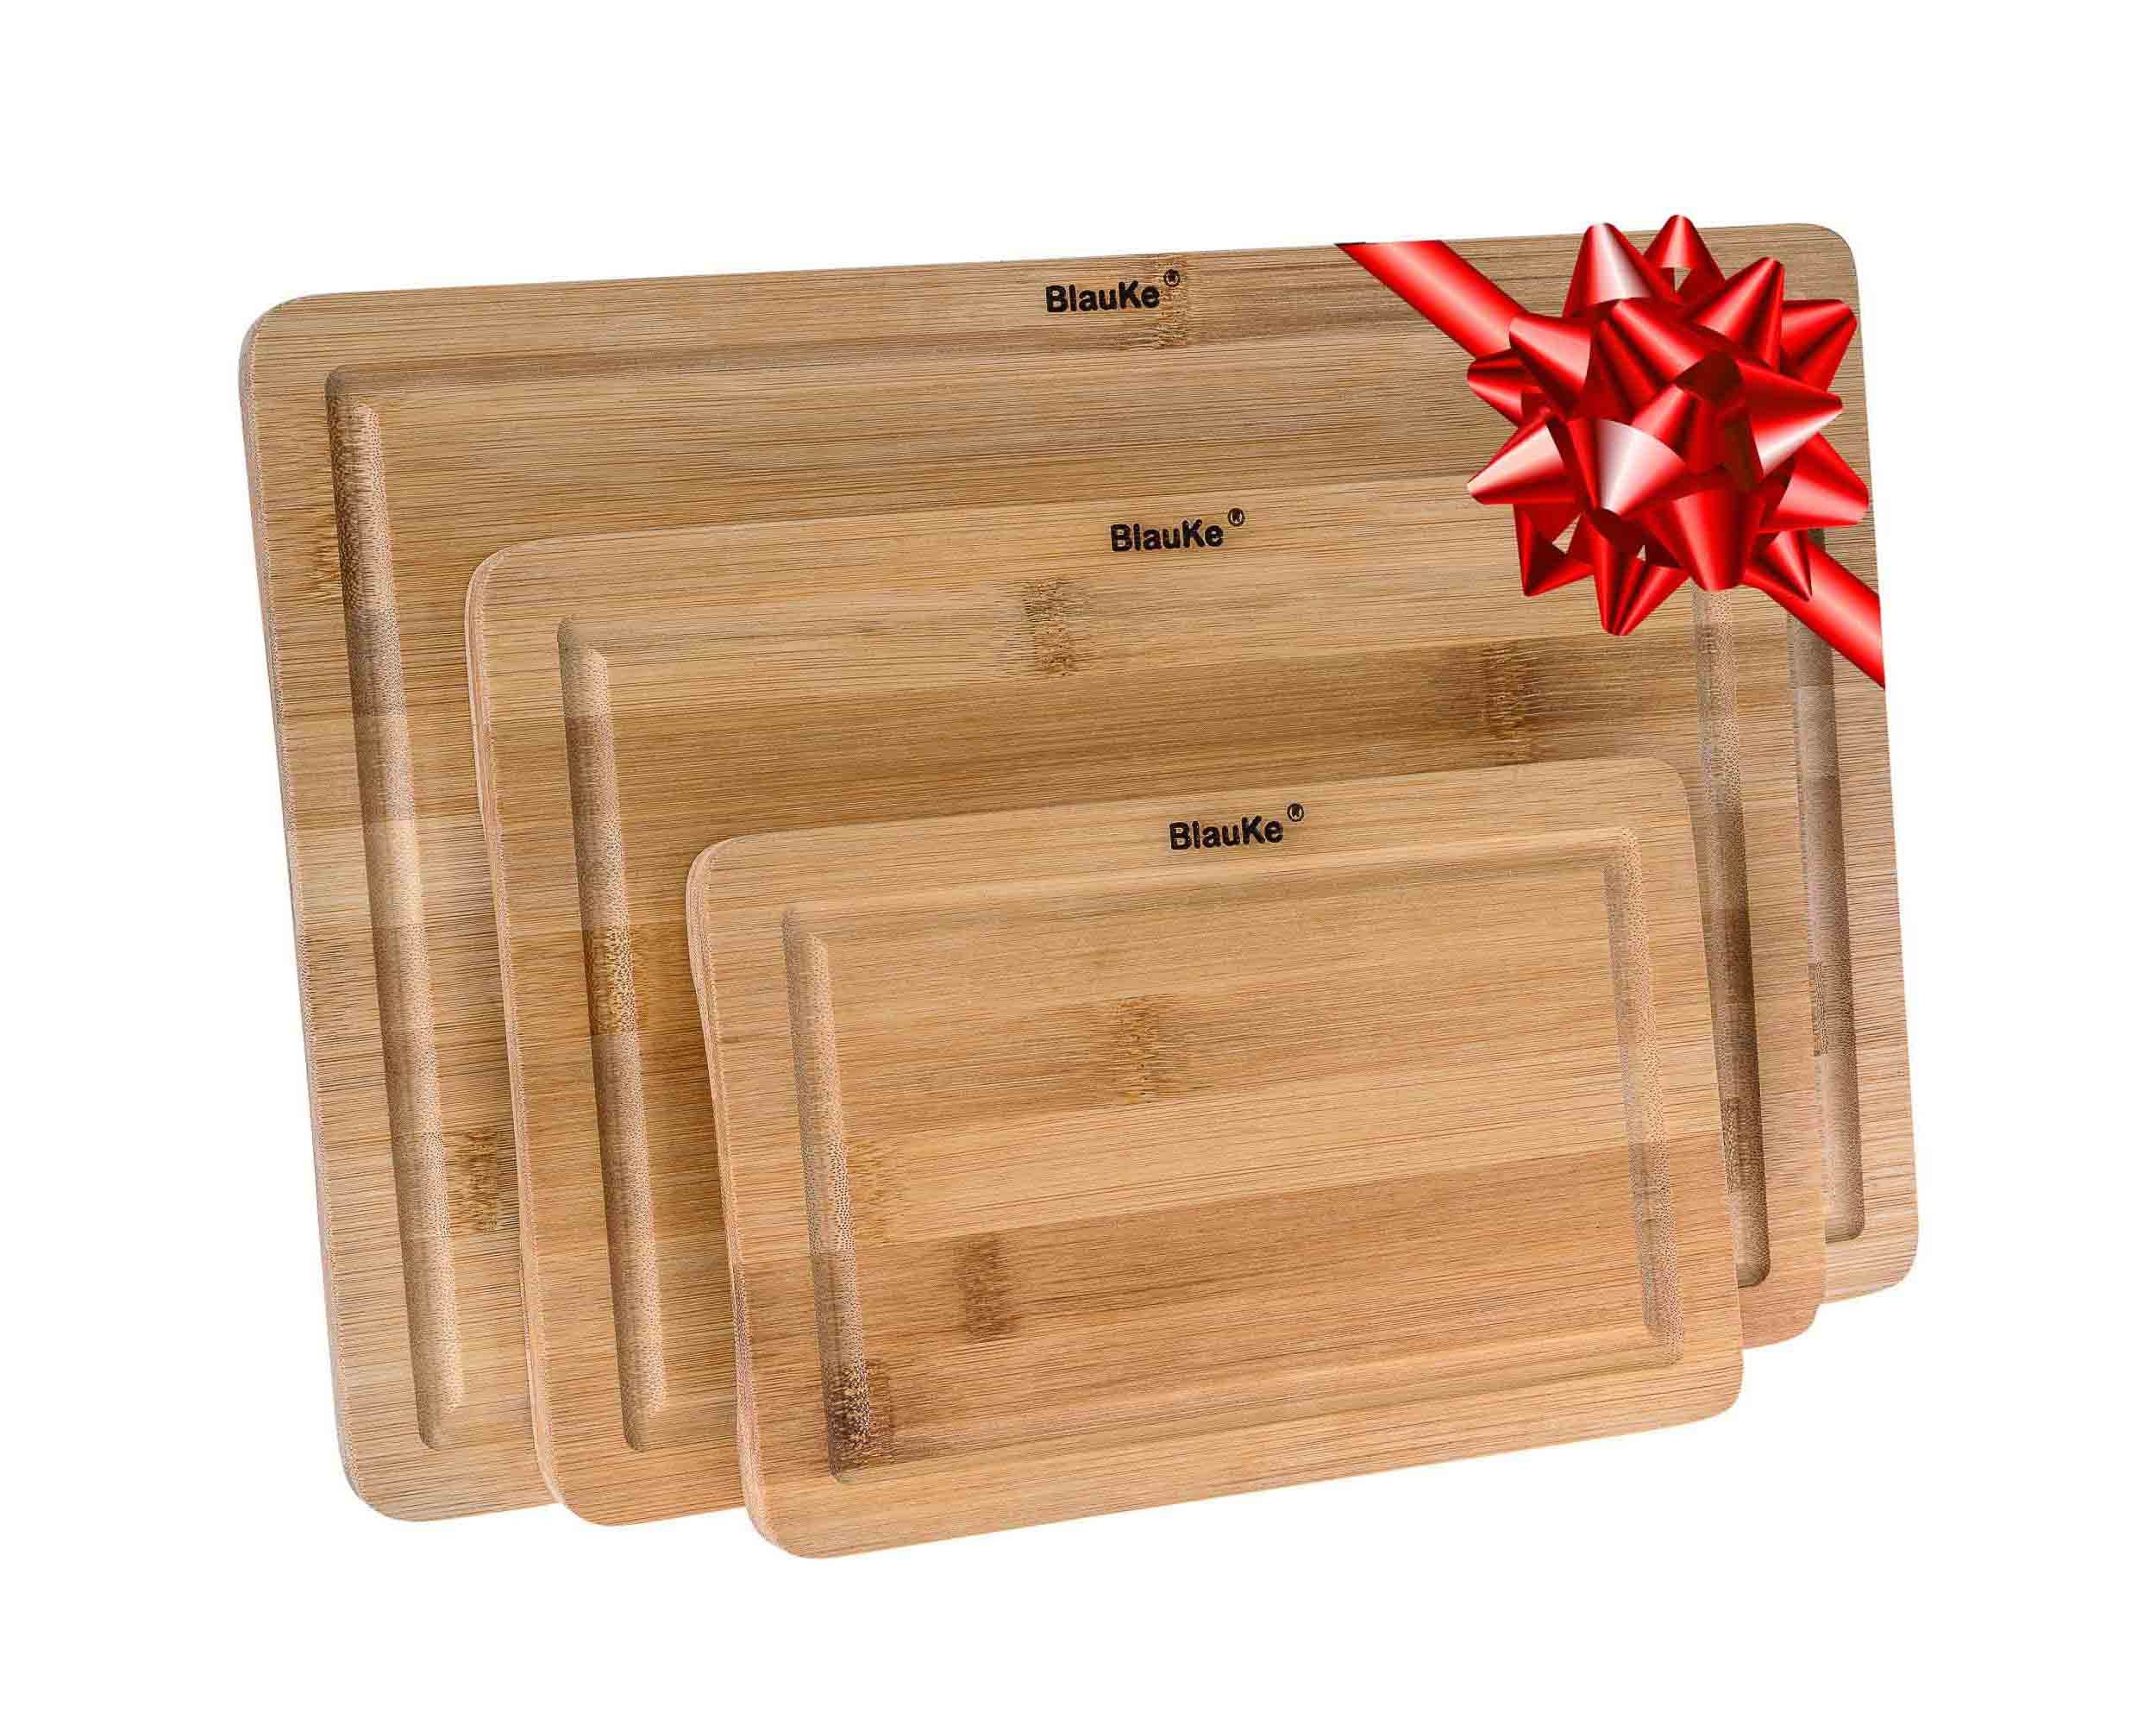  SMIRLY Bamboo Cutting Board Set - Wood Cutting Board Set with  Holder, Large Wooden Cutting Boards For Kitchen, Cutting Board Wood, Wooden  Chopping Board, Wooden Cutting Board Set: Home & Kitchen